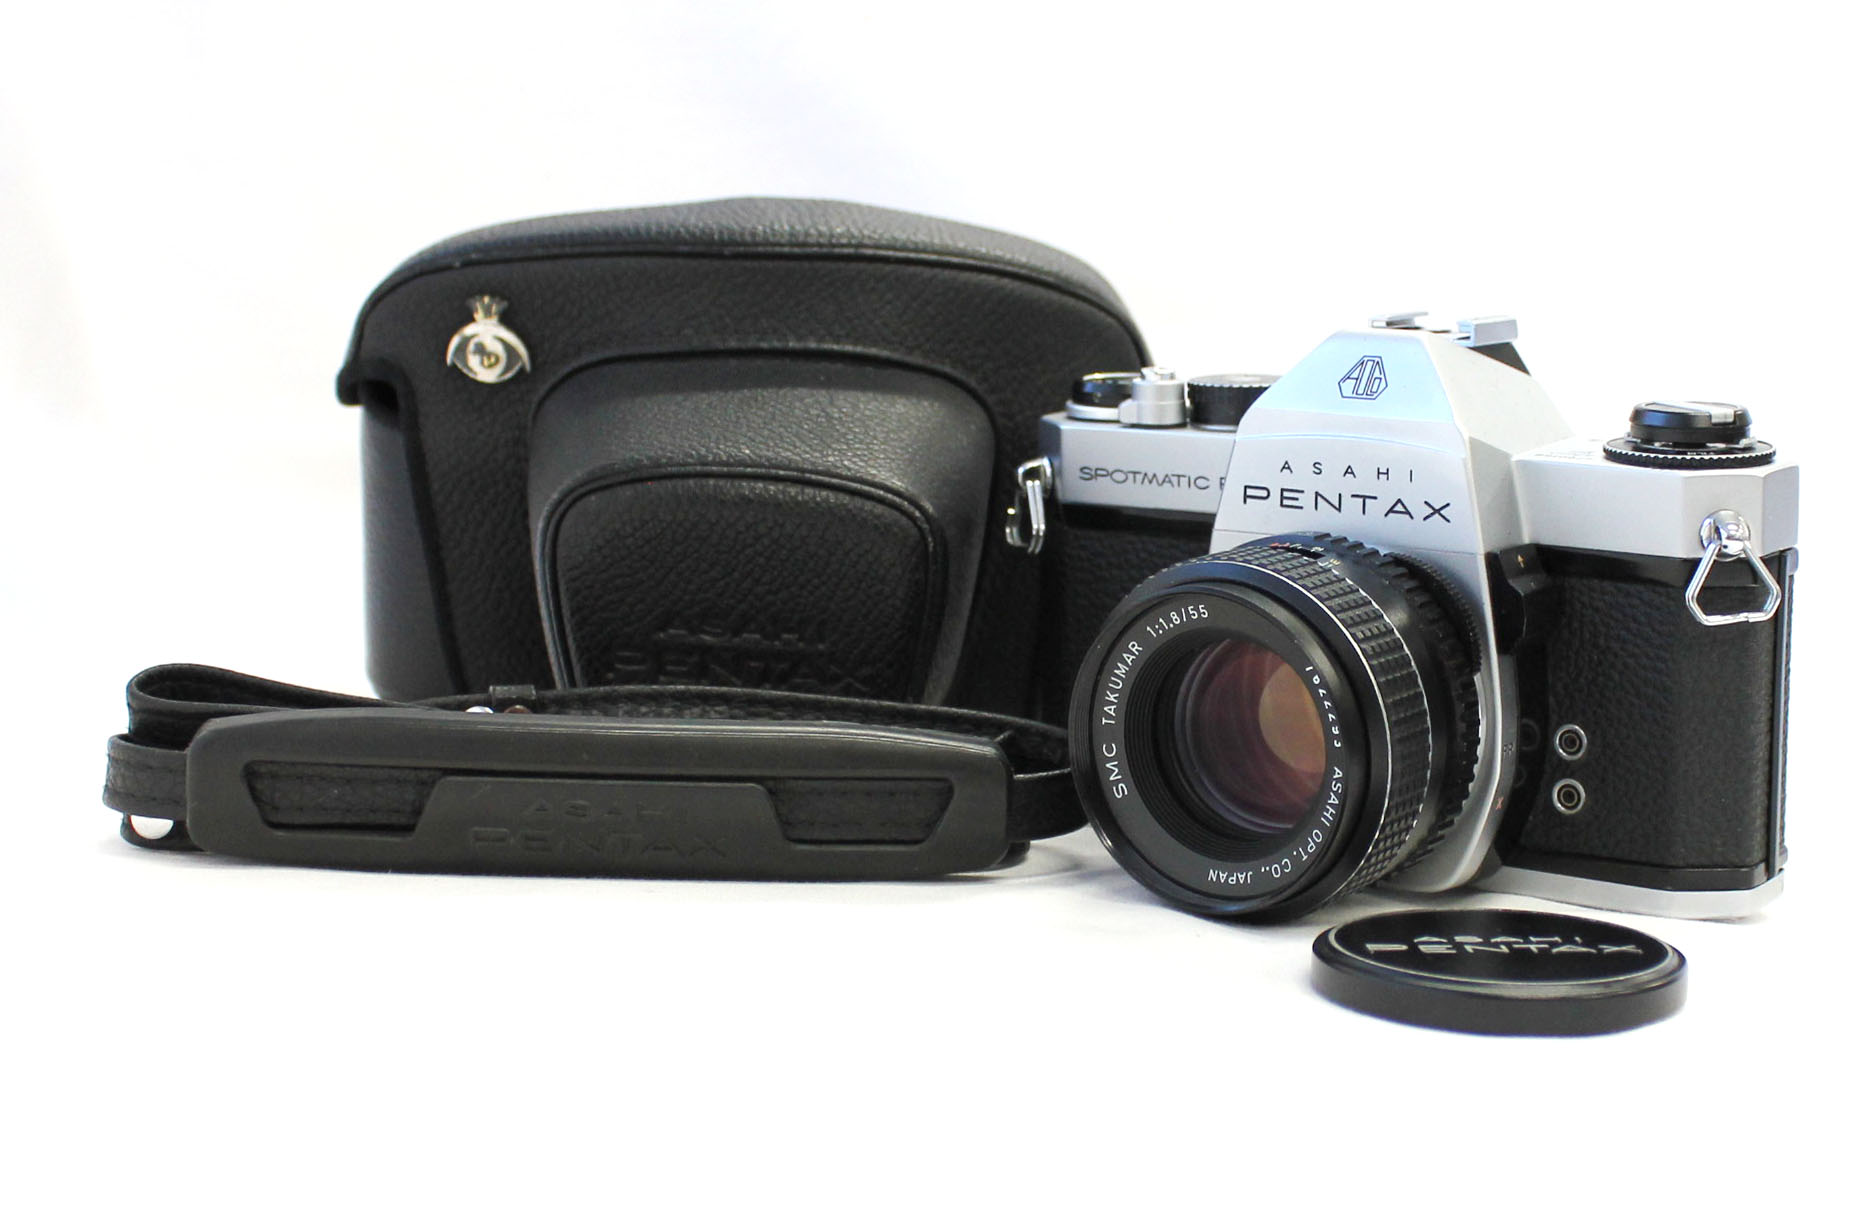 Asahi Pentax Spotmatic F SPF 35mm SLR Camera with SMC Takumar 55mm F/1.8 Lens and Case from Japan